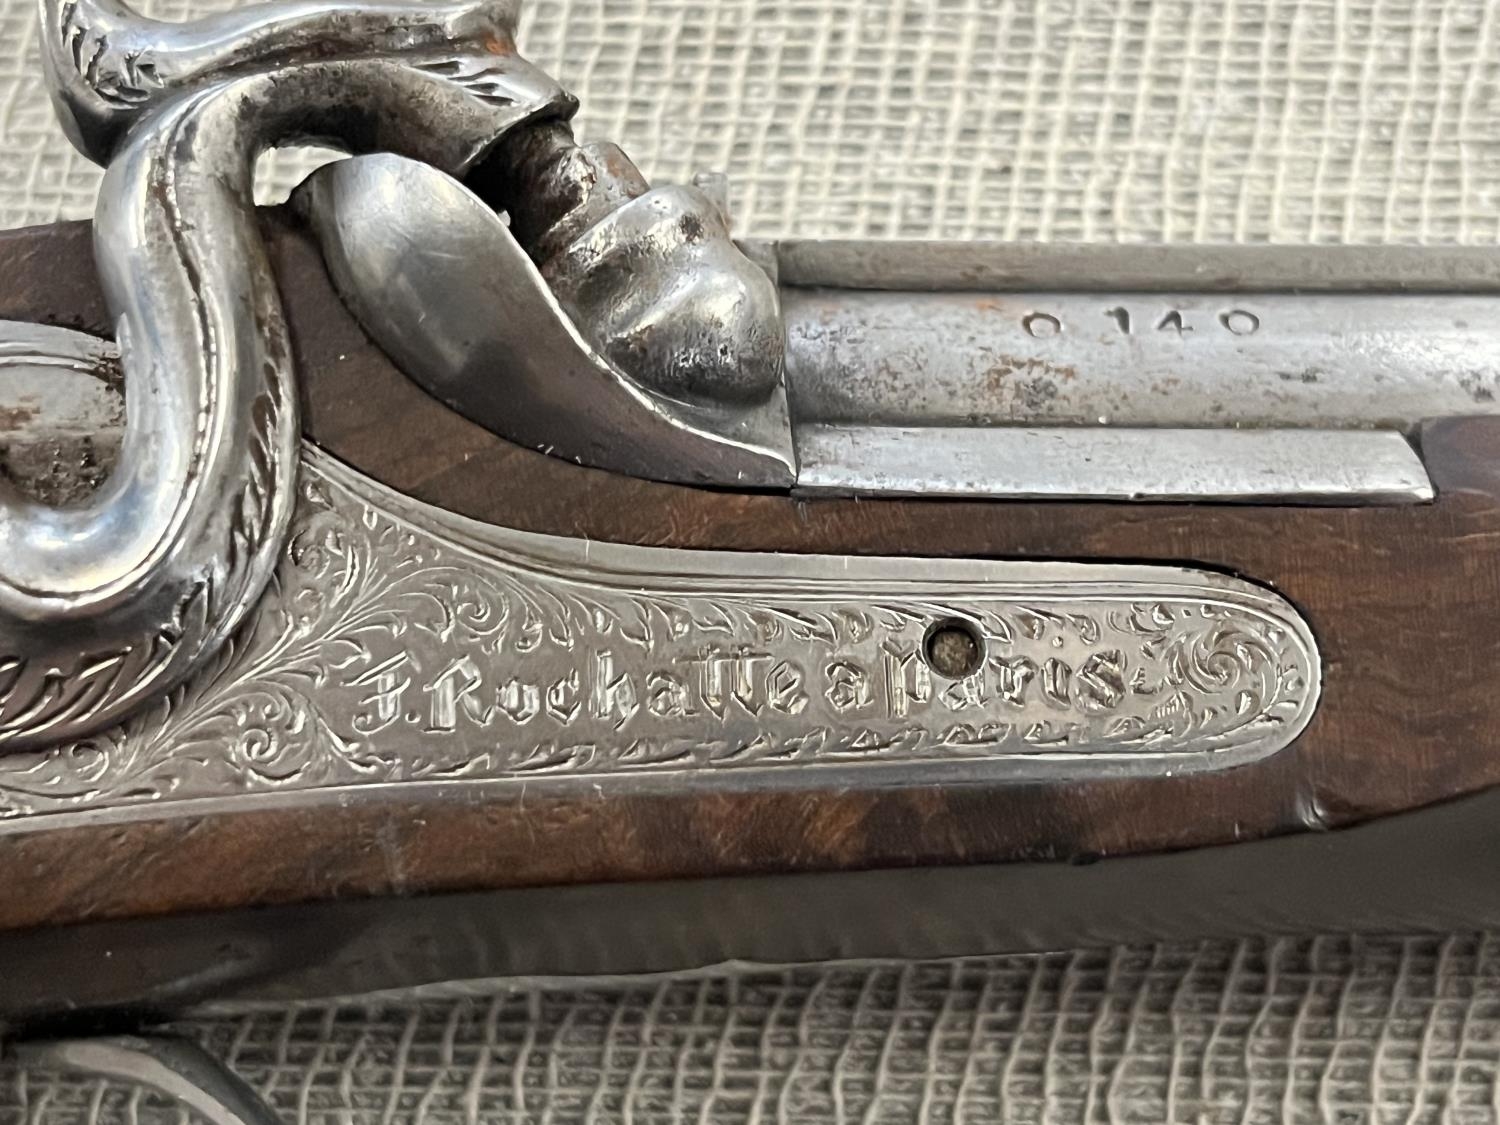 A P. Bondini .45 calibre single shot muzzle loading pistol. Black powder only. Serial number 0140. - Image 3 of 5